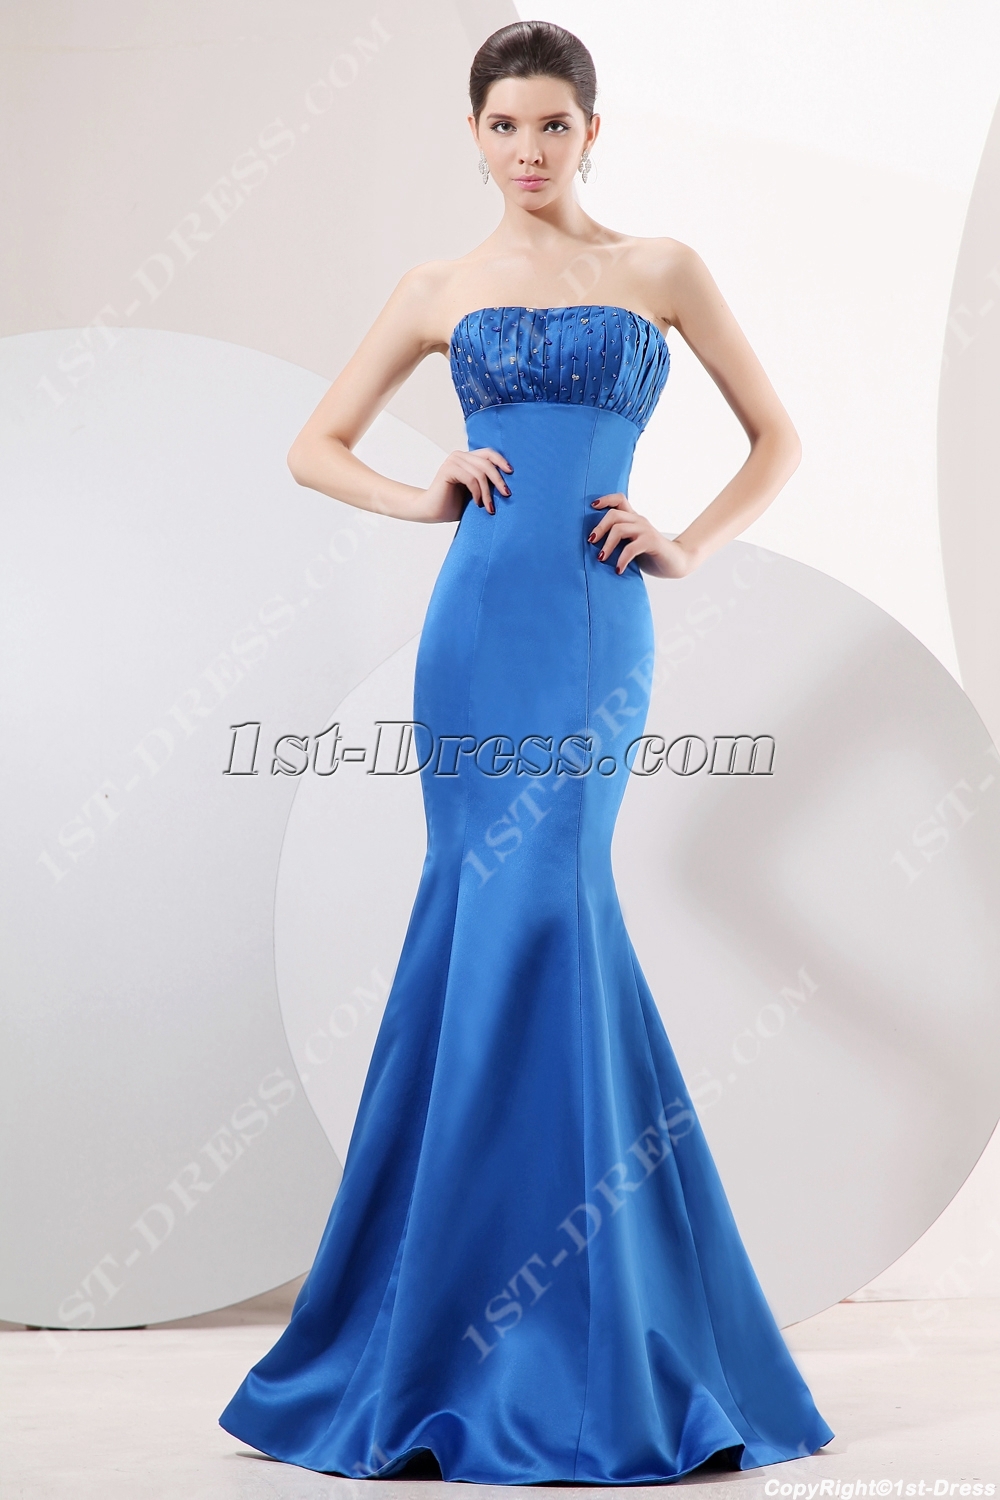 images/201311/big/Royal-Blue-Sheath-Prom-Dress-2011-3526-b-1-1384441818.jpg